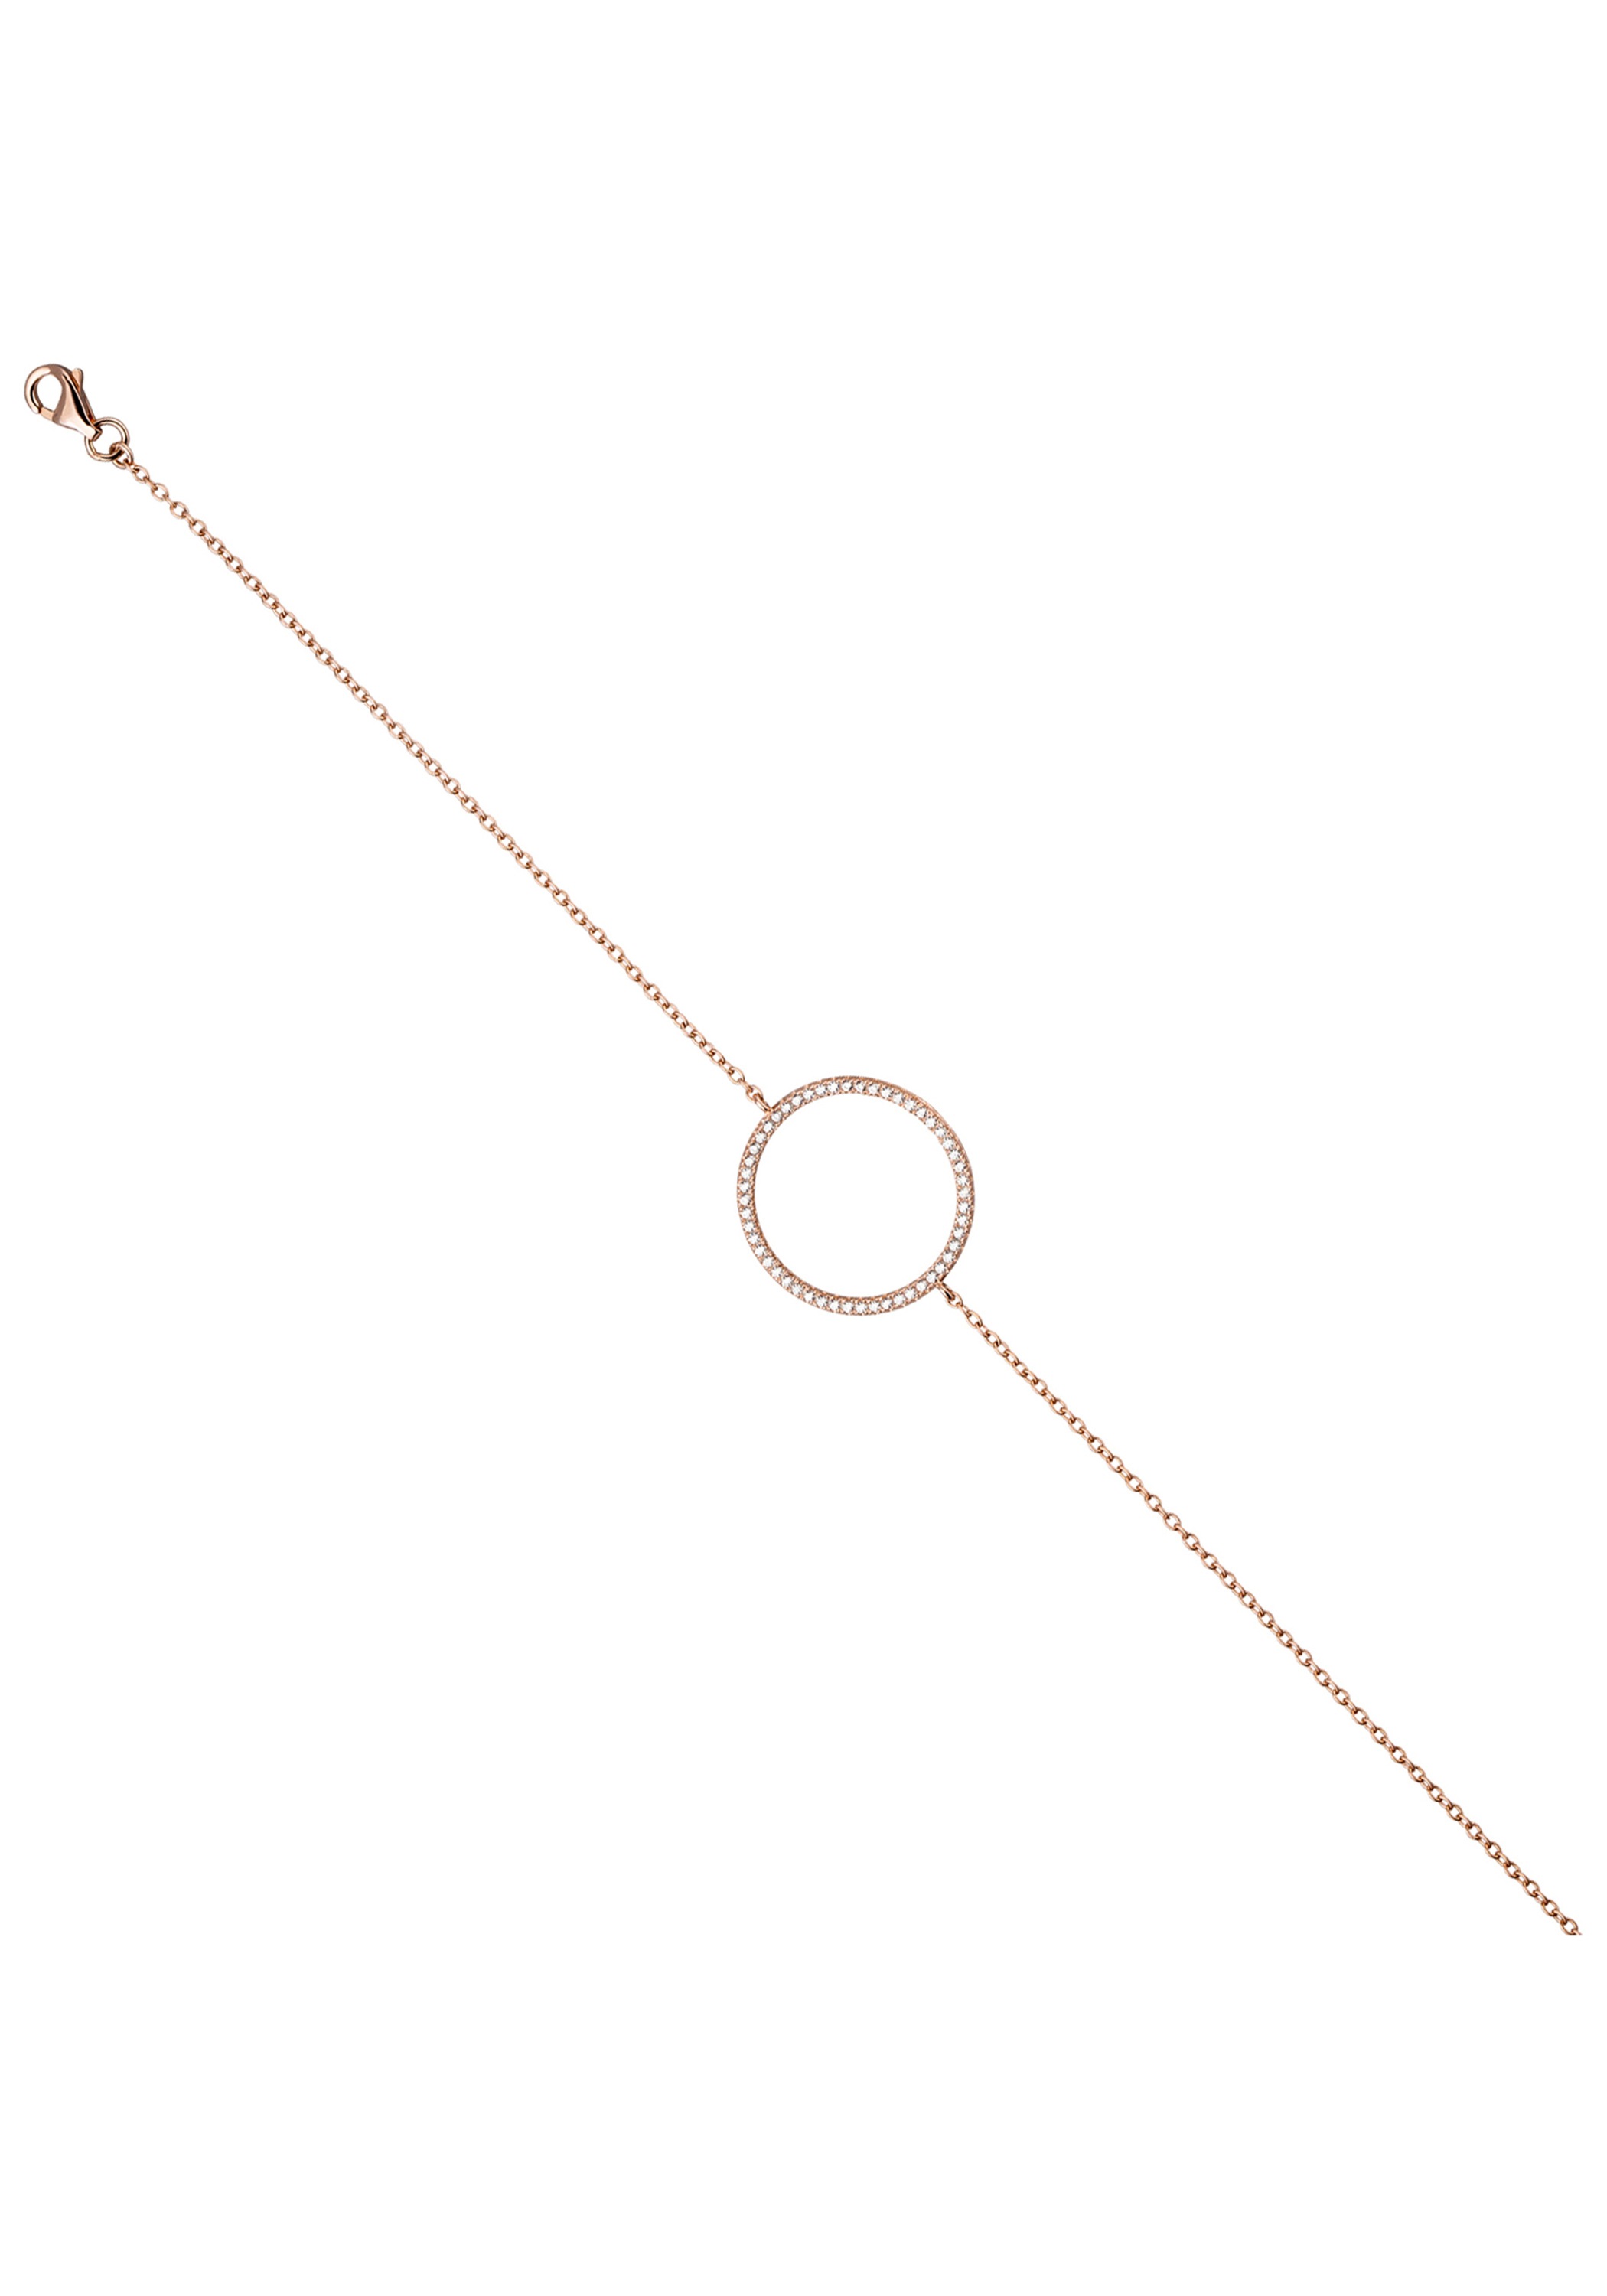 21 bestellen 925 cm roségold online JOBO | BAUR vergoldet mit Zirkonia Armband, Silber